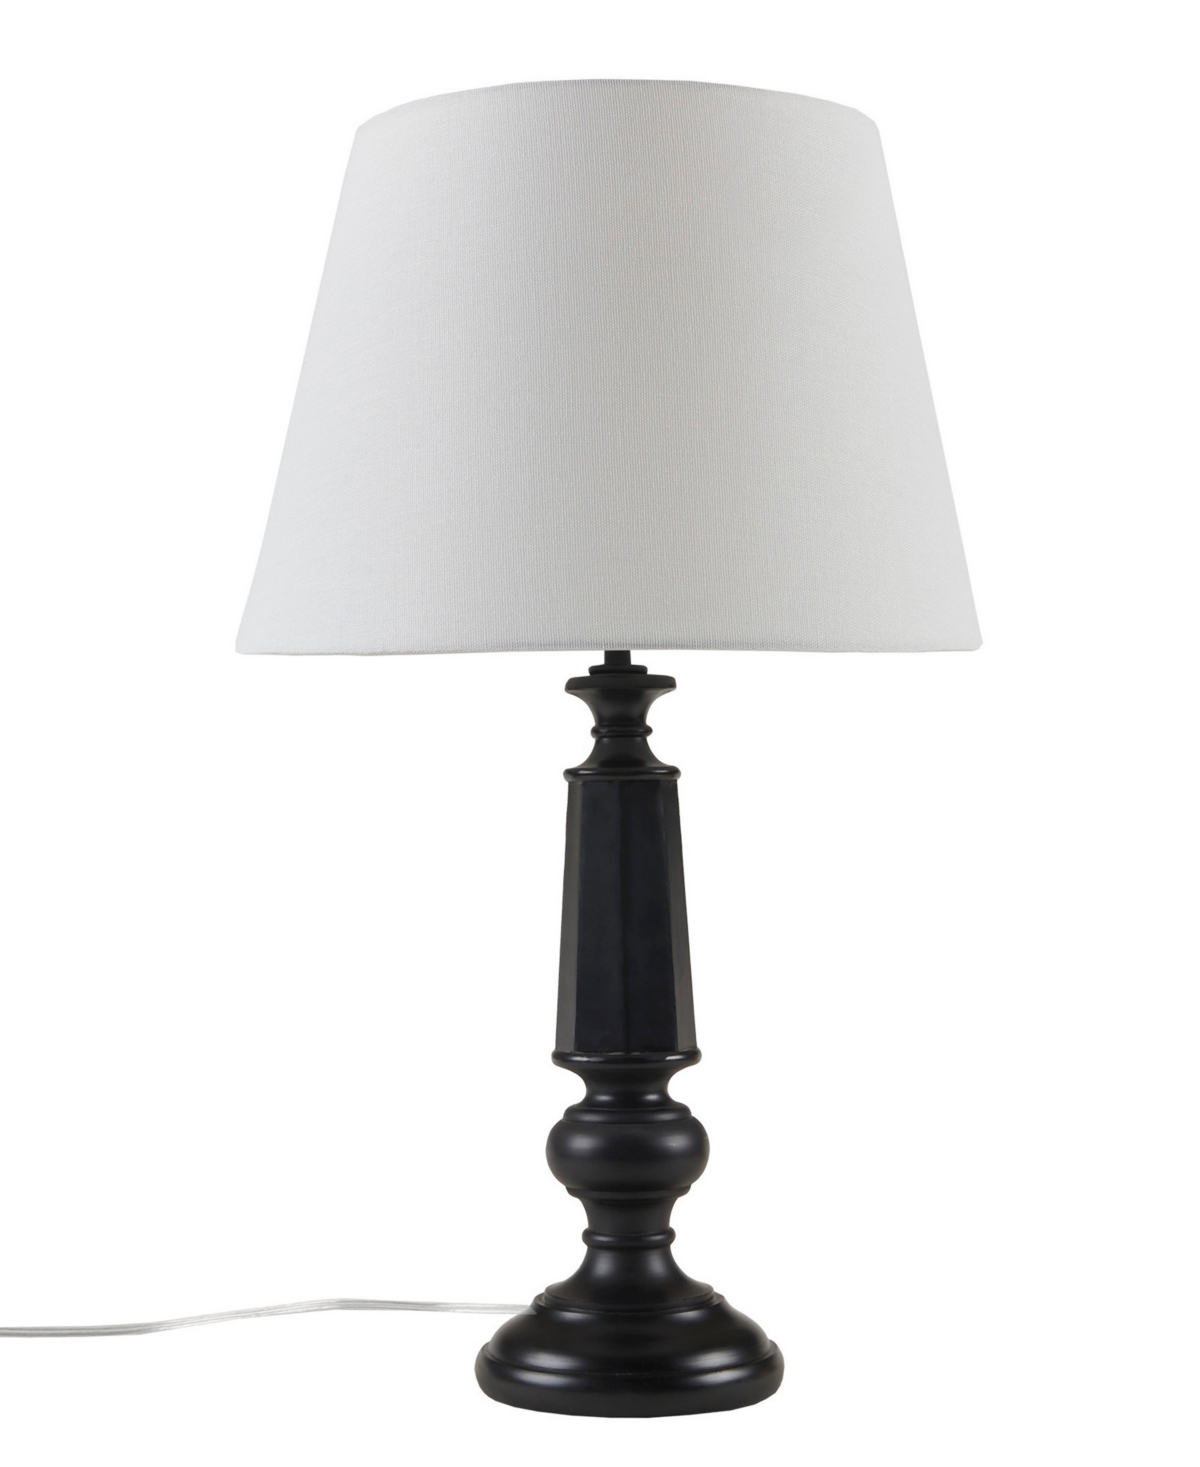 Martha Stewart Landsdown Faceted Table Lamp In Black